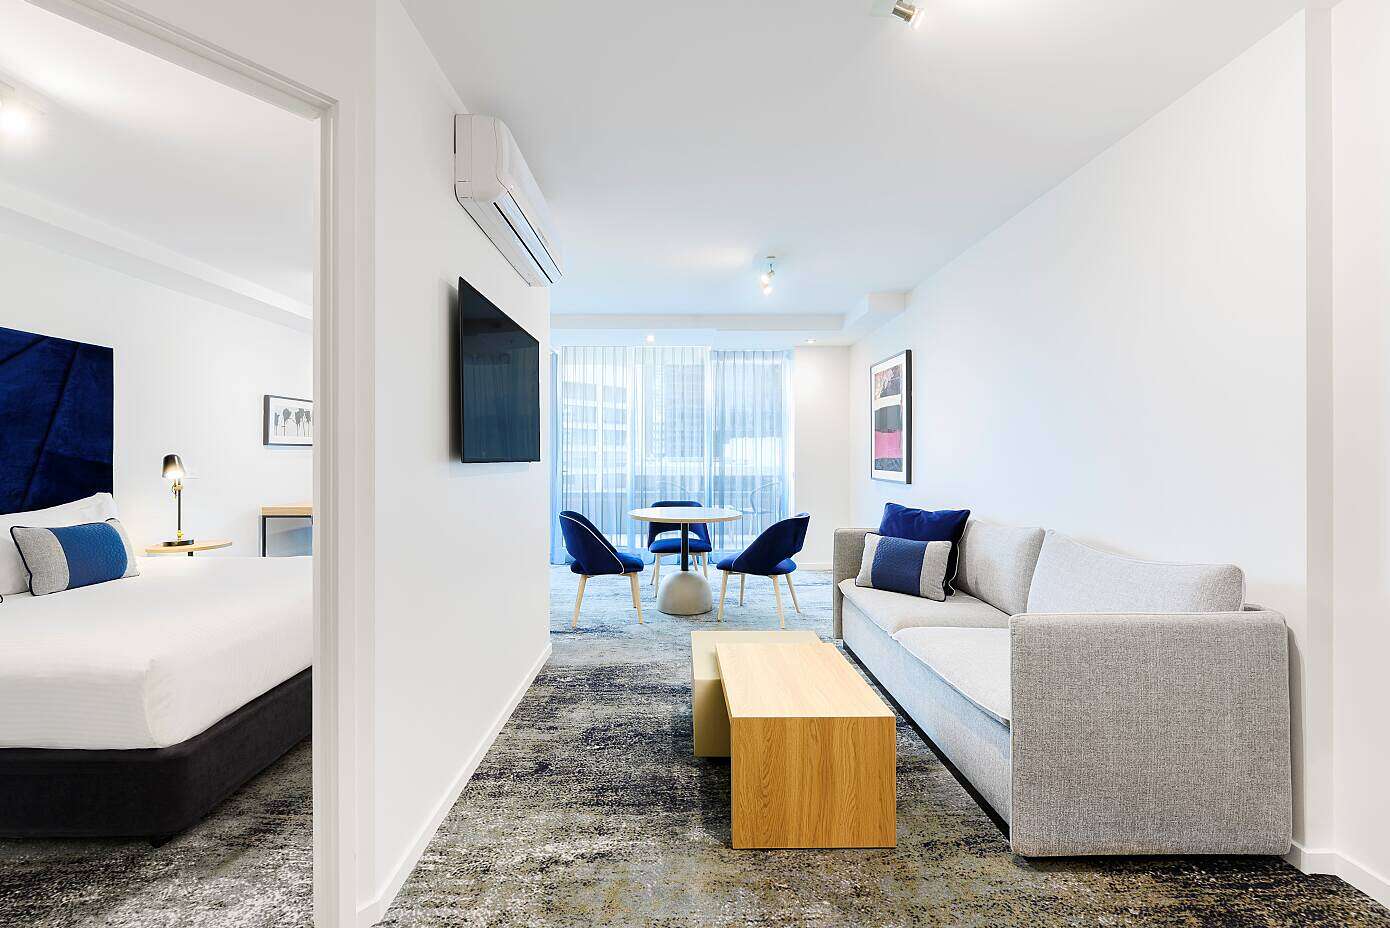 Adina Apartment Hotel by In Design International